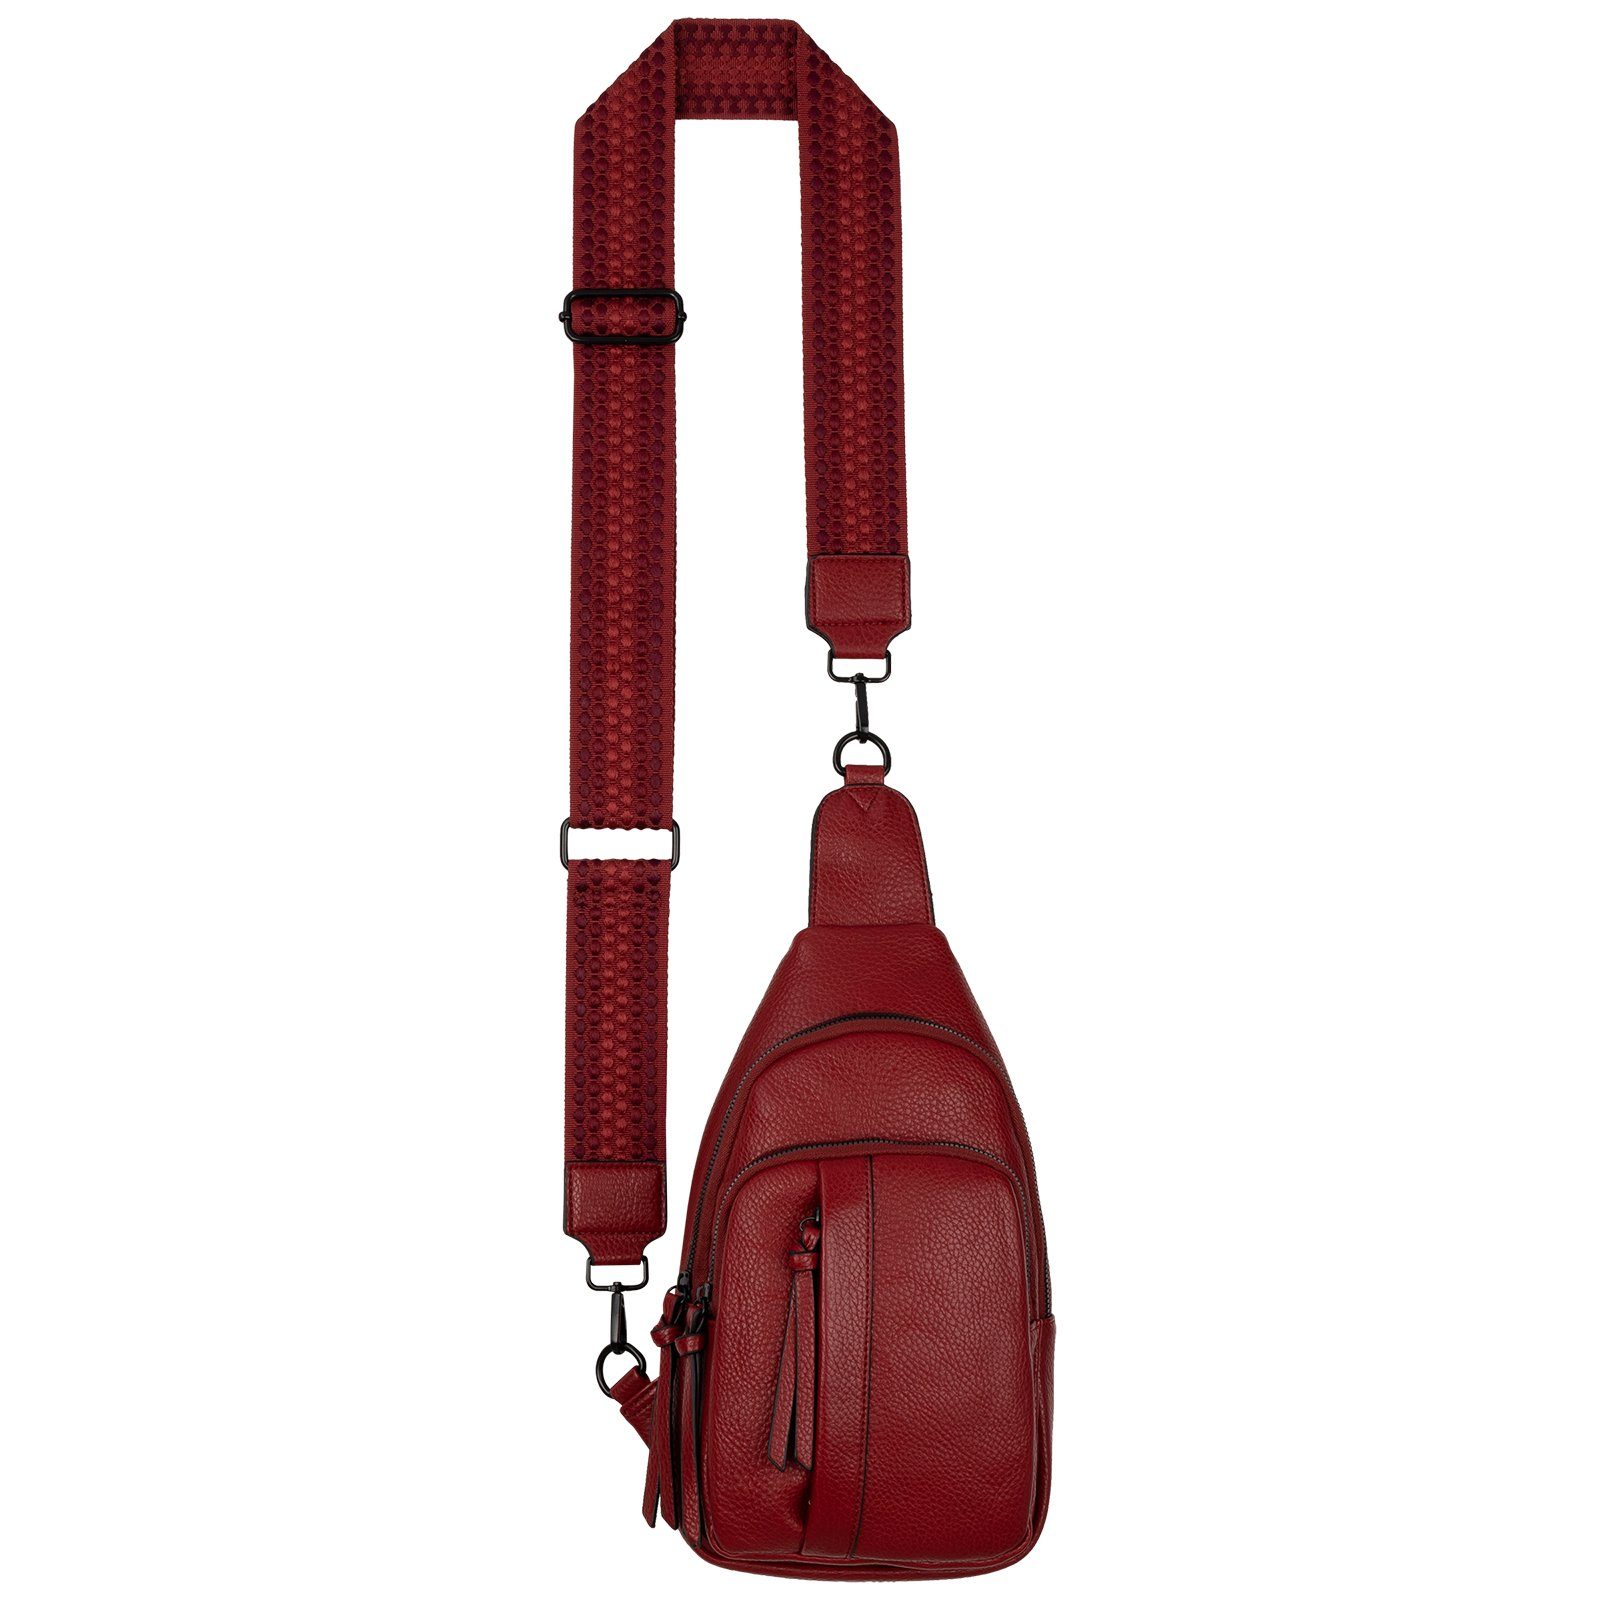 EAAKIE Umhängetasche Brusttasche Umhängetasche Schultertasche Cross Body Bag Kunstleder, als Schultertasche, CrossOver, Umhängetasche tragbar RED